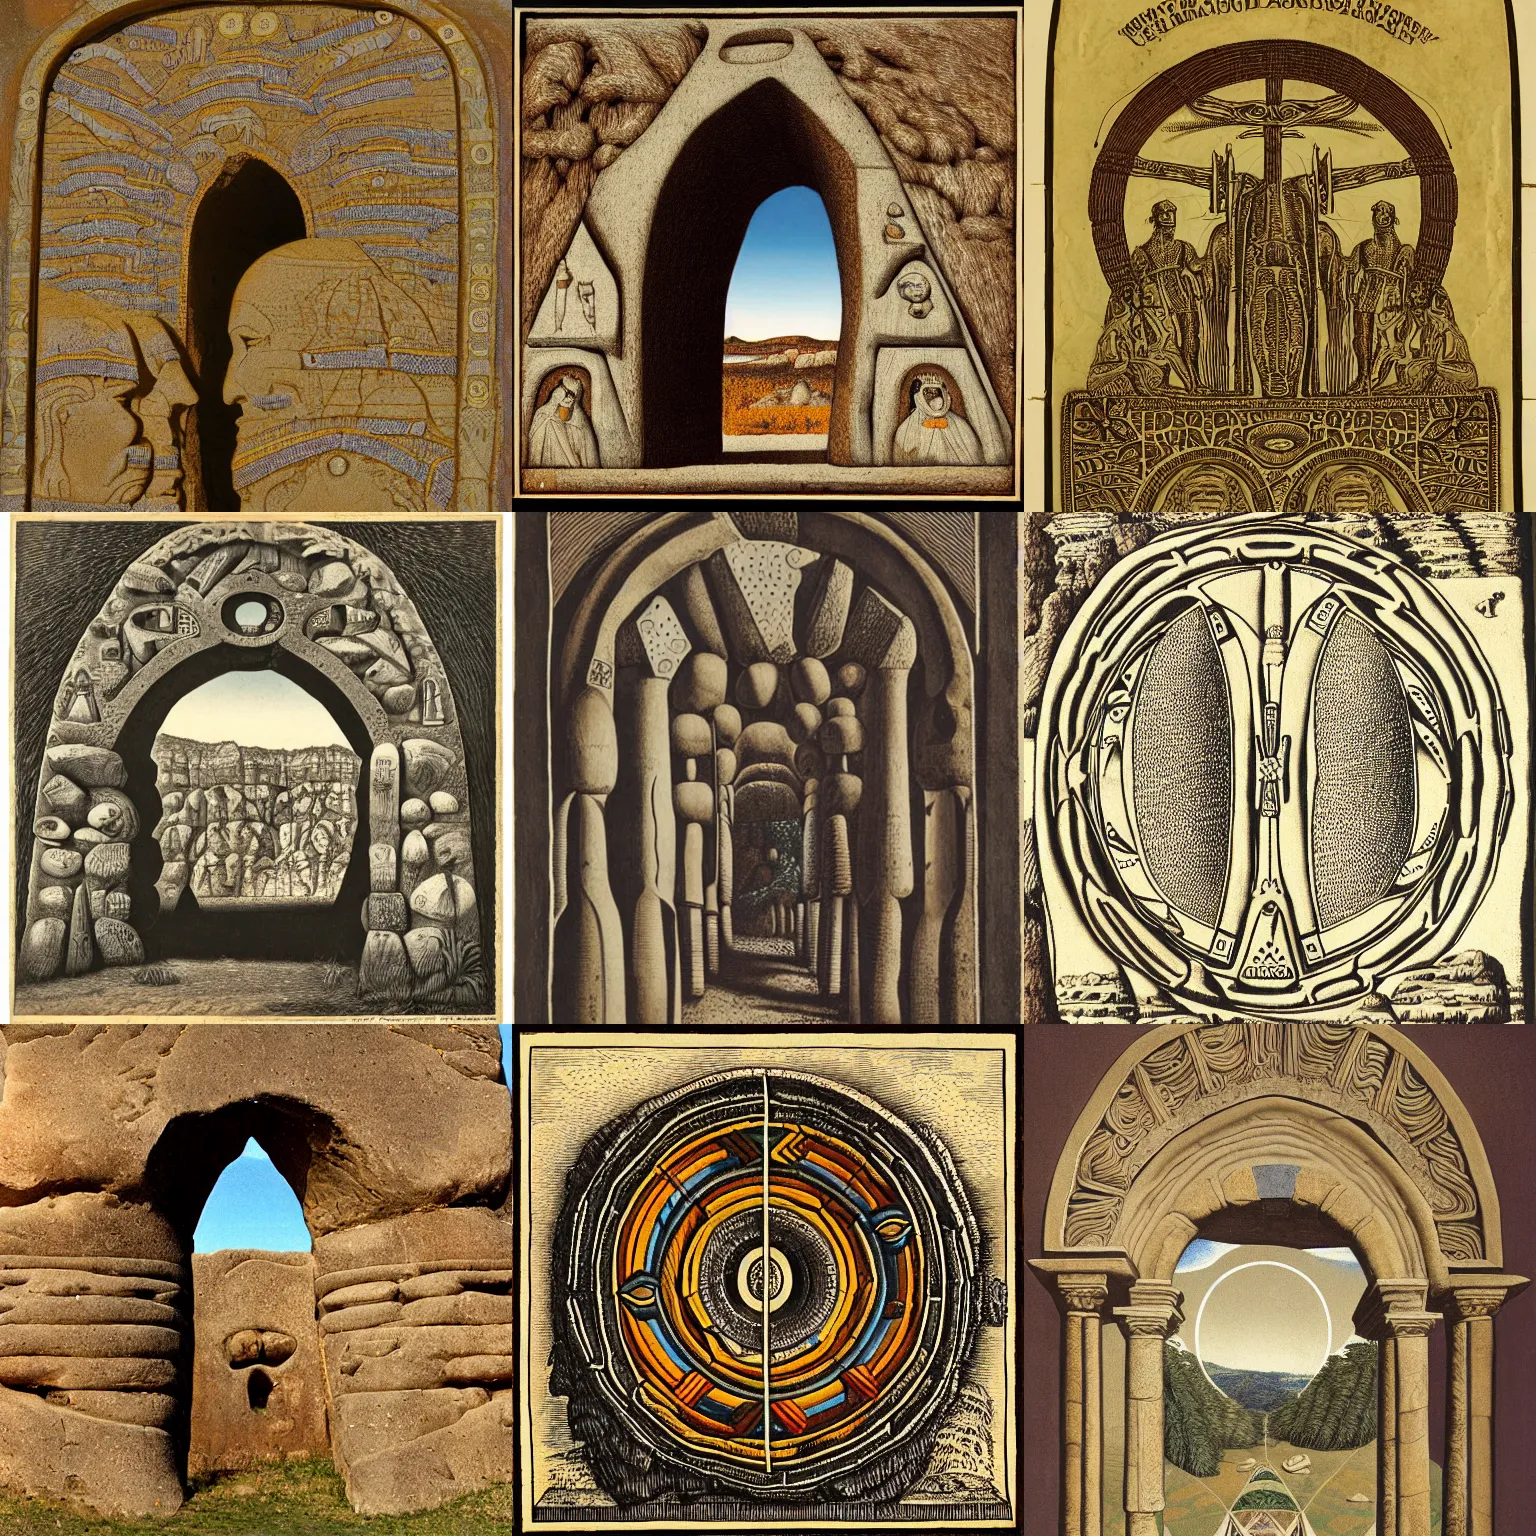 Prompt: a spiritual selknam stone arch, engraving by gustav dure, aboriginal, symmetrically centered, close shot